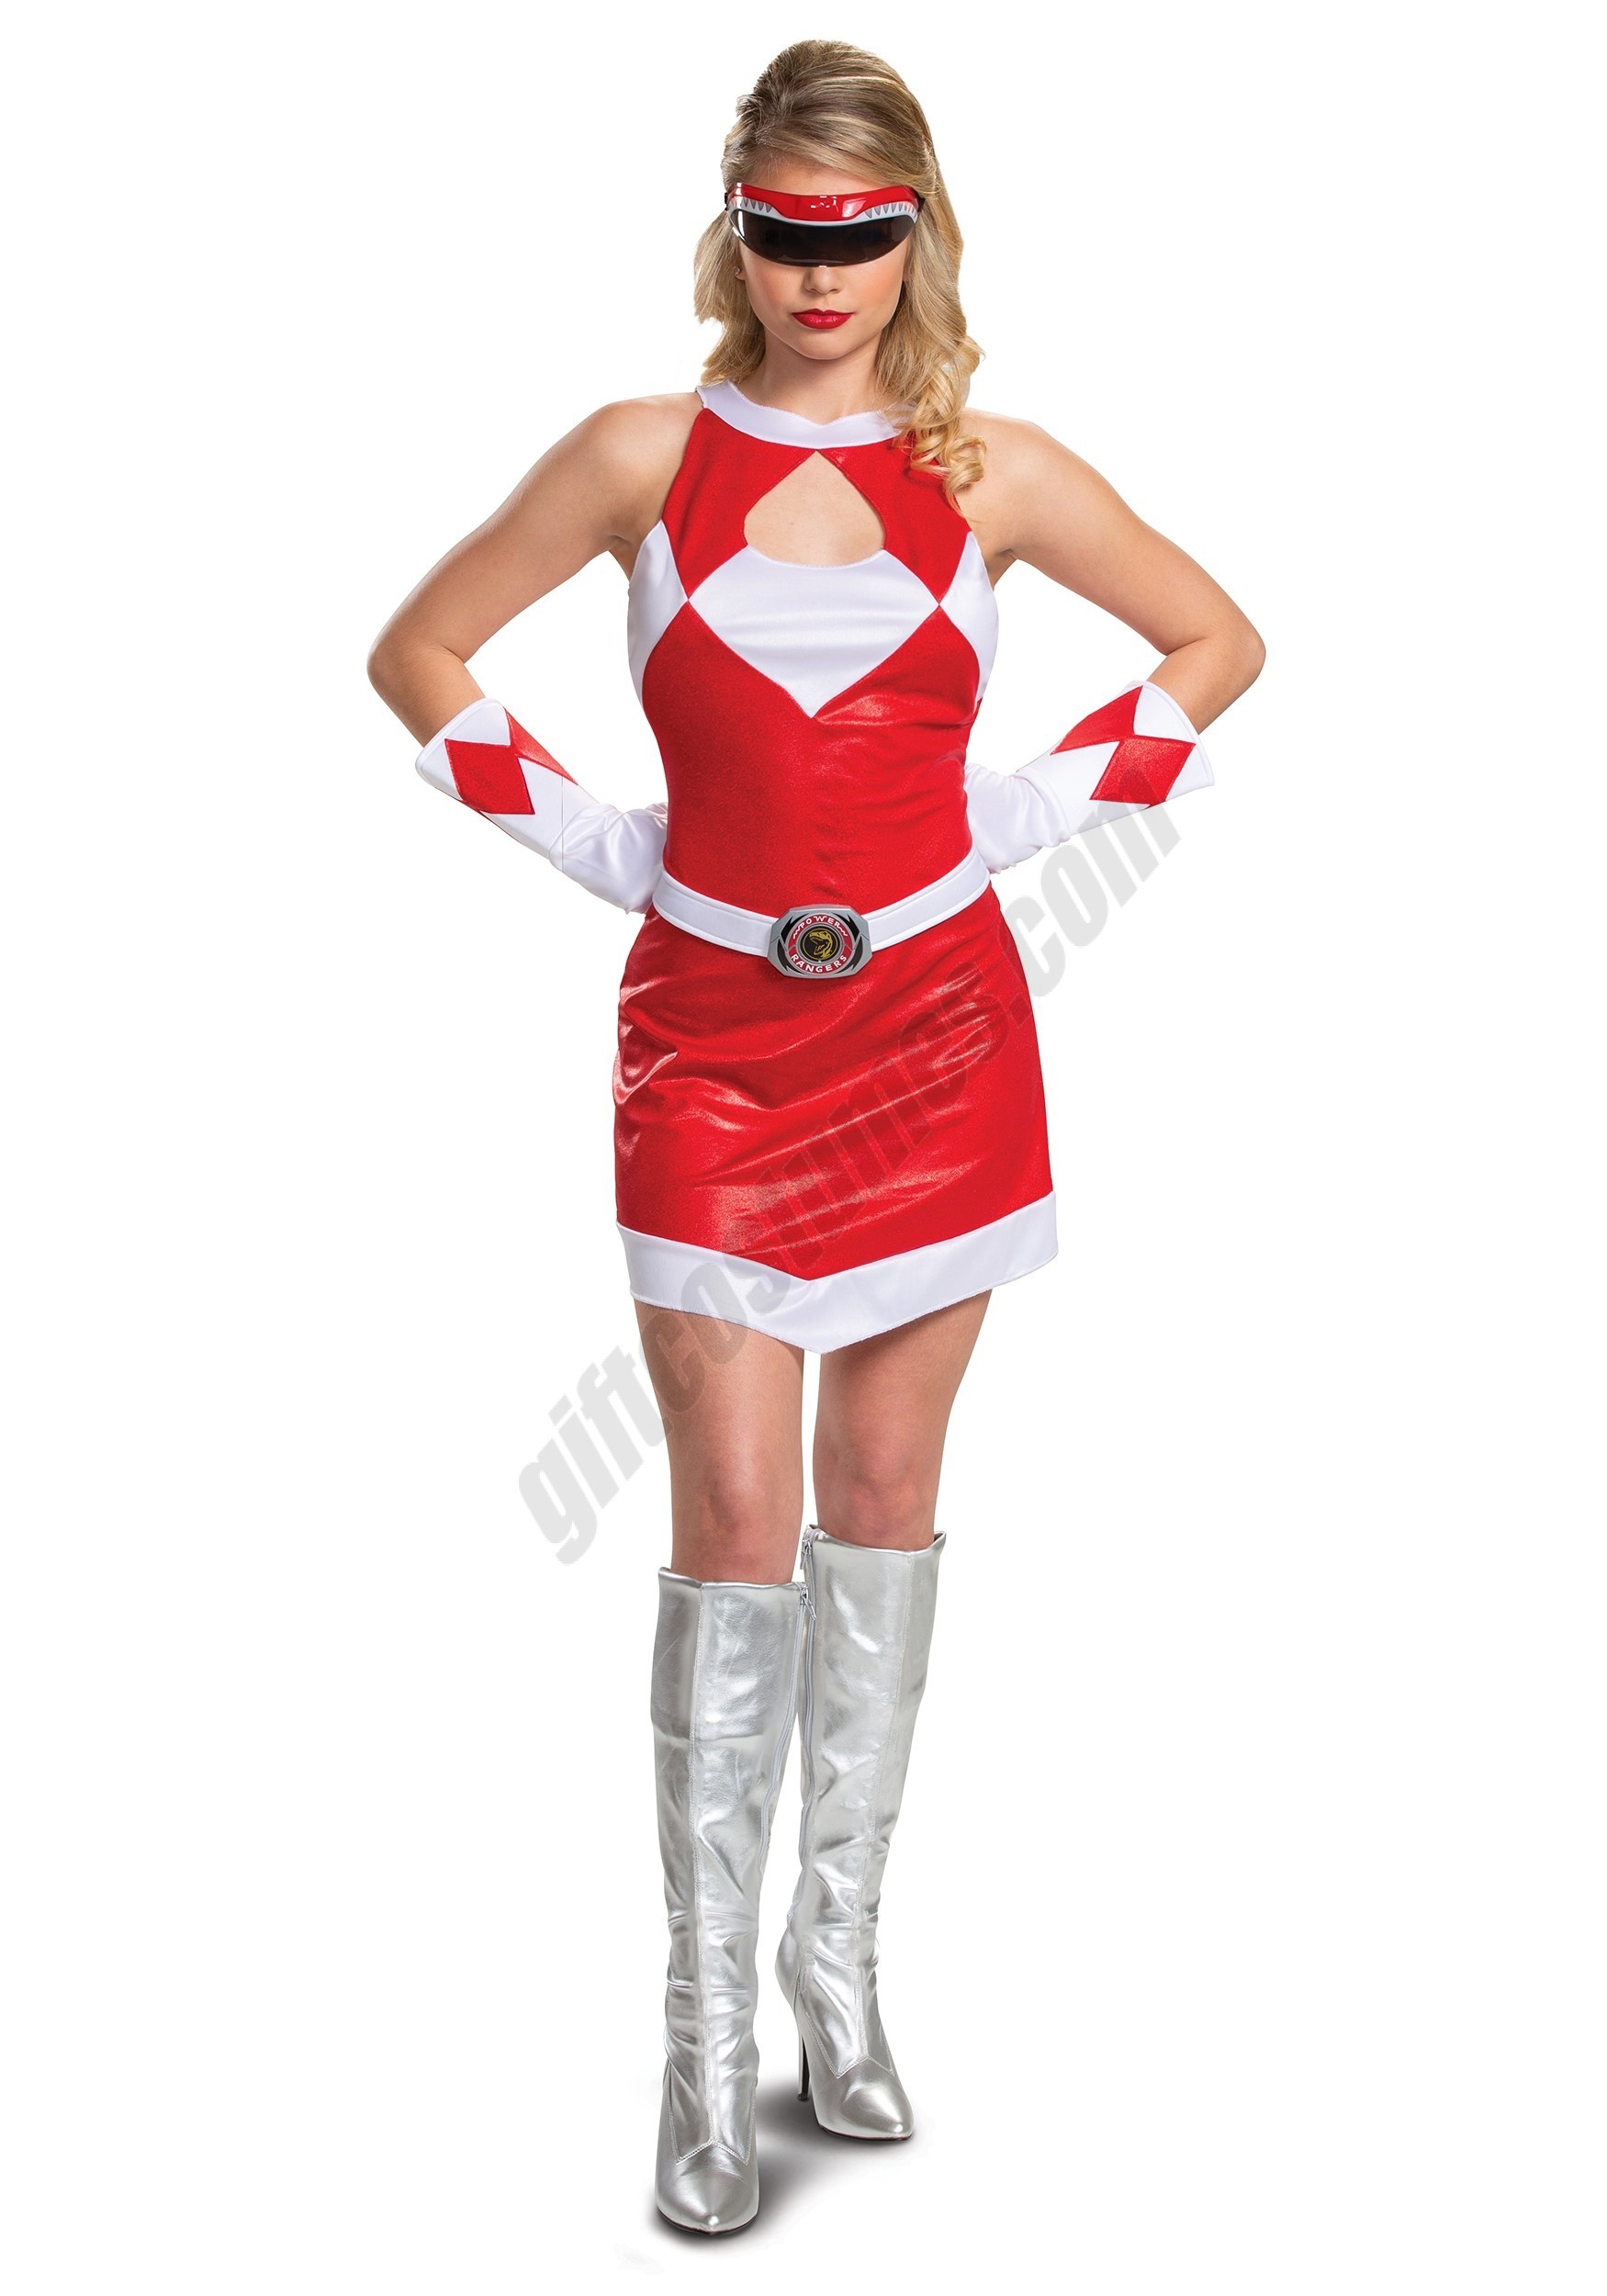 Women's Power Rangers Deluxe Red Ranger Costume - Women's Power Rangers Deluxe Red Ranger Costume